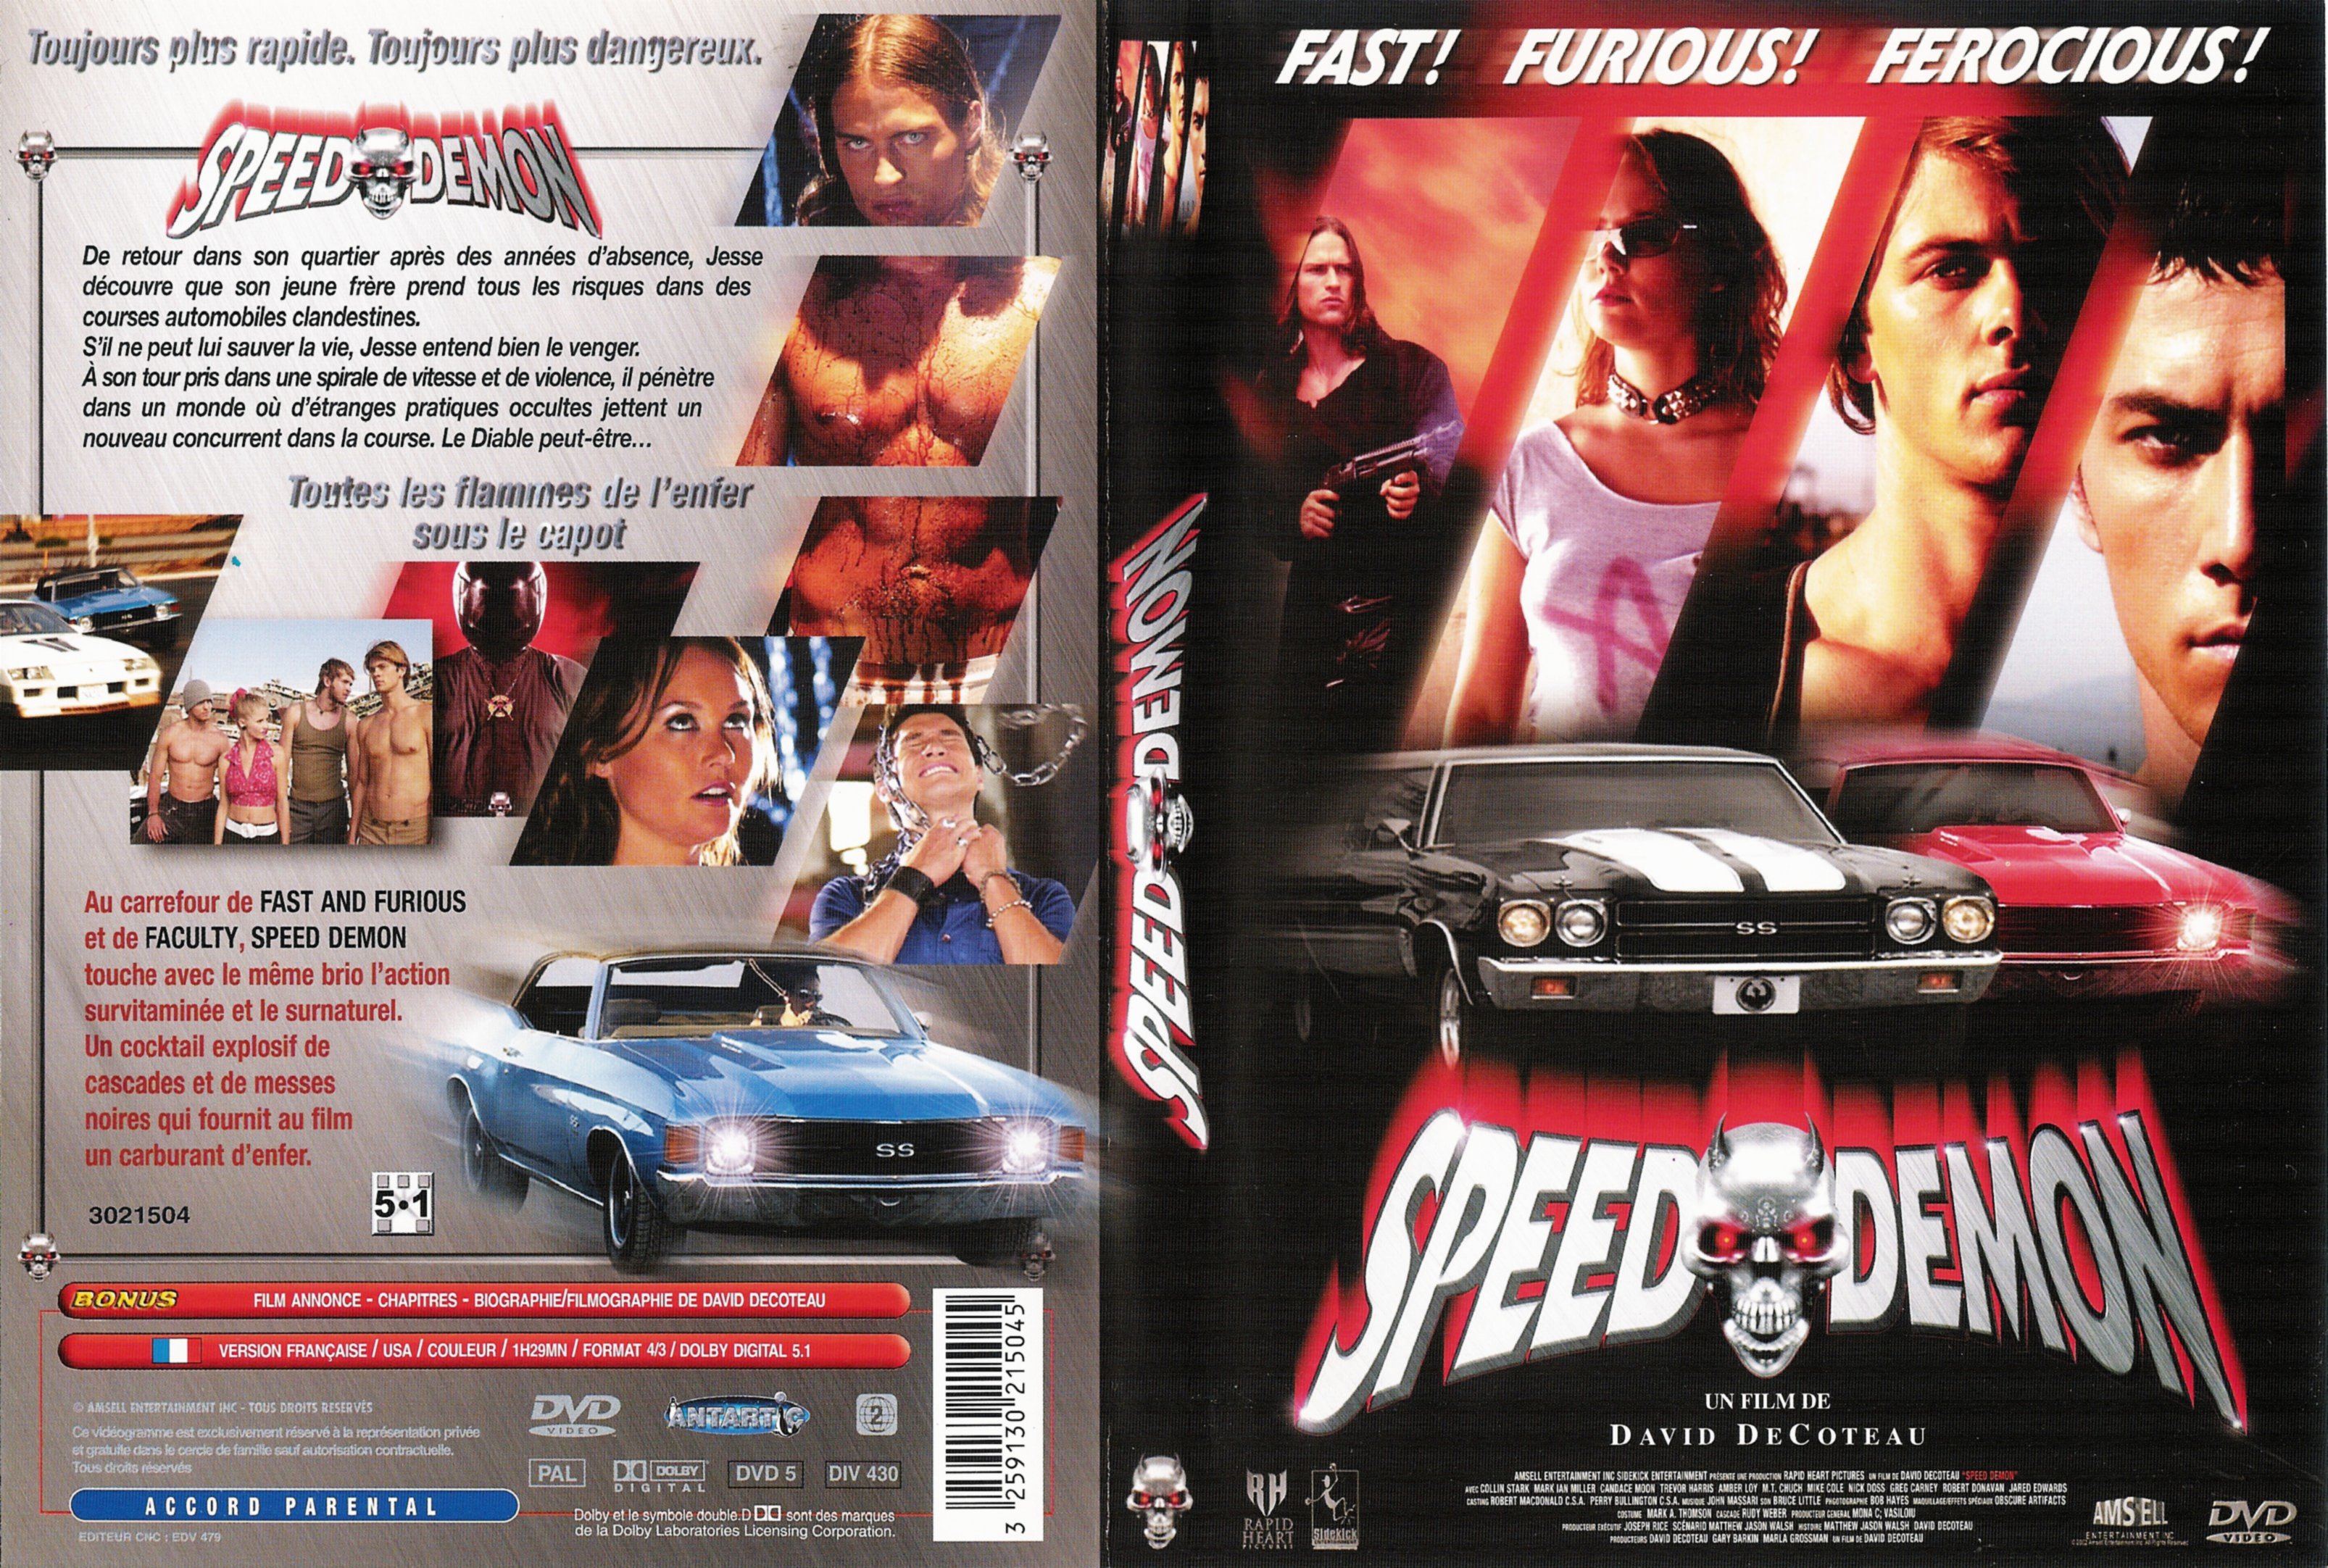 Jaquette DVD Speed demon